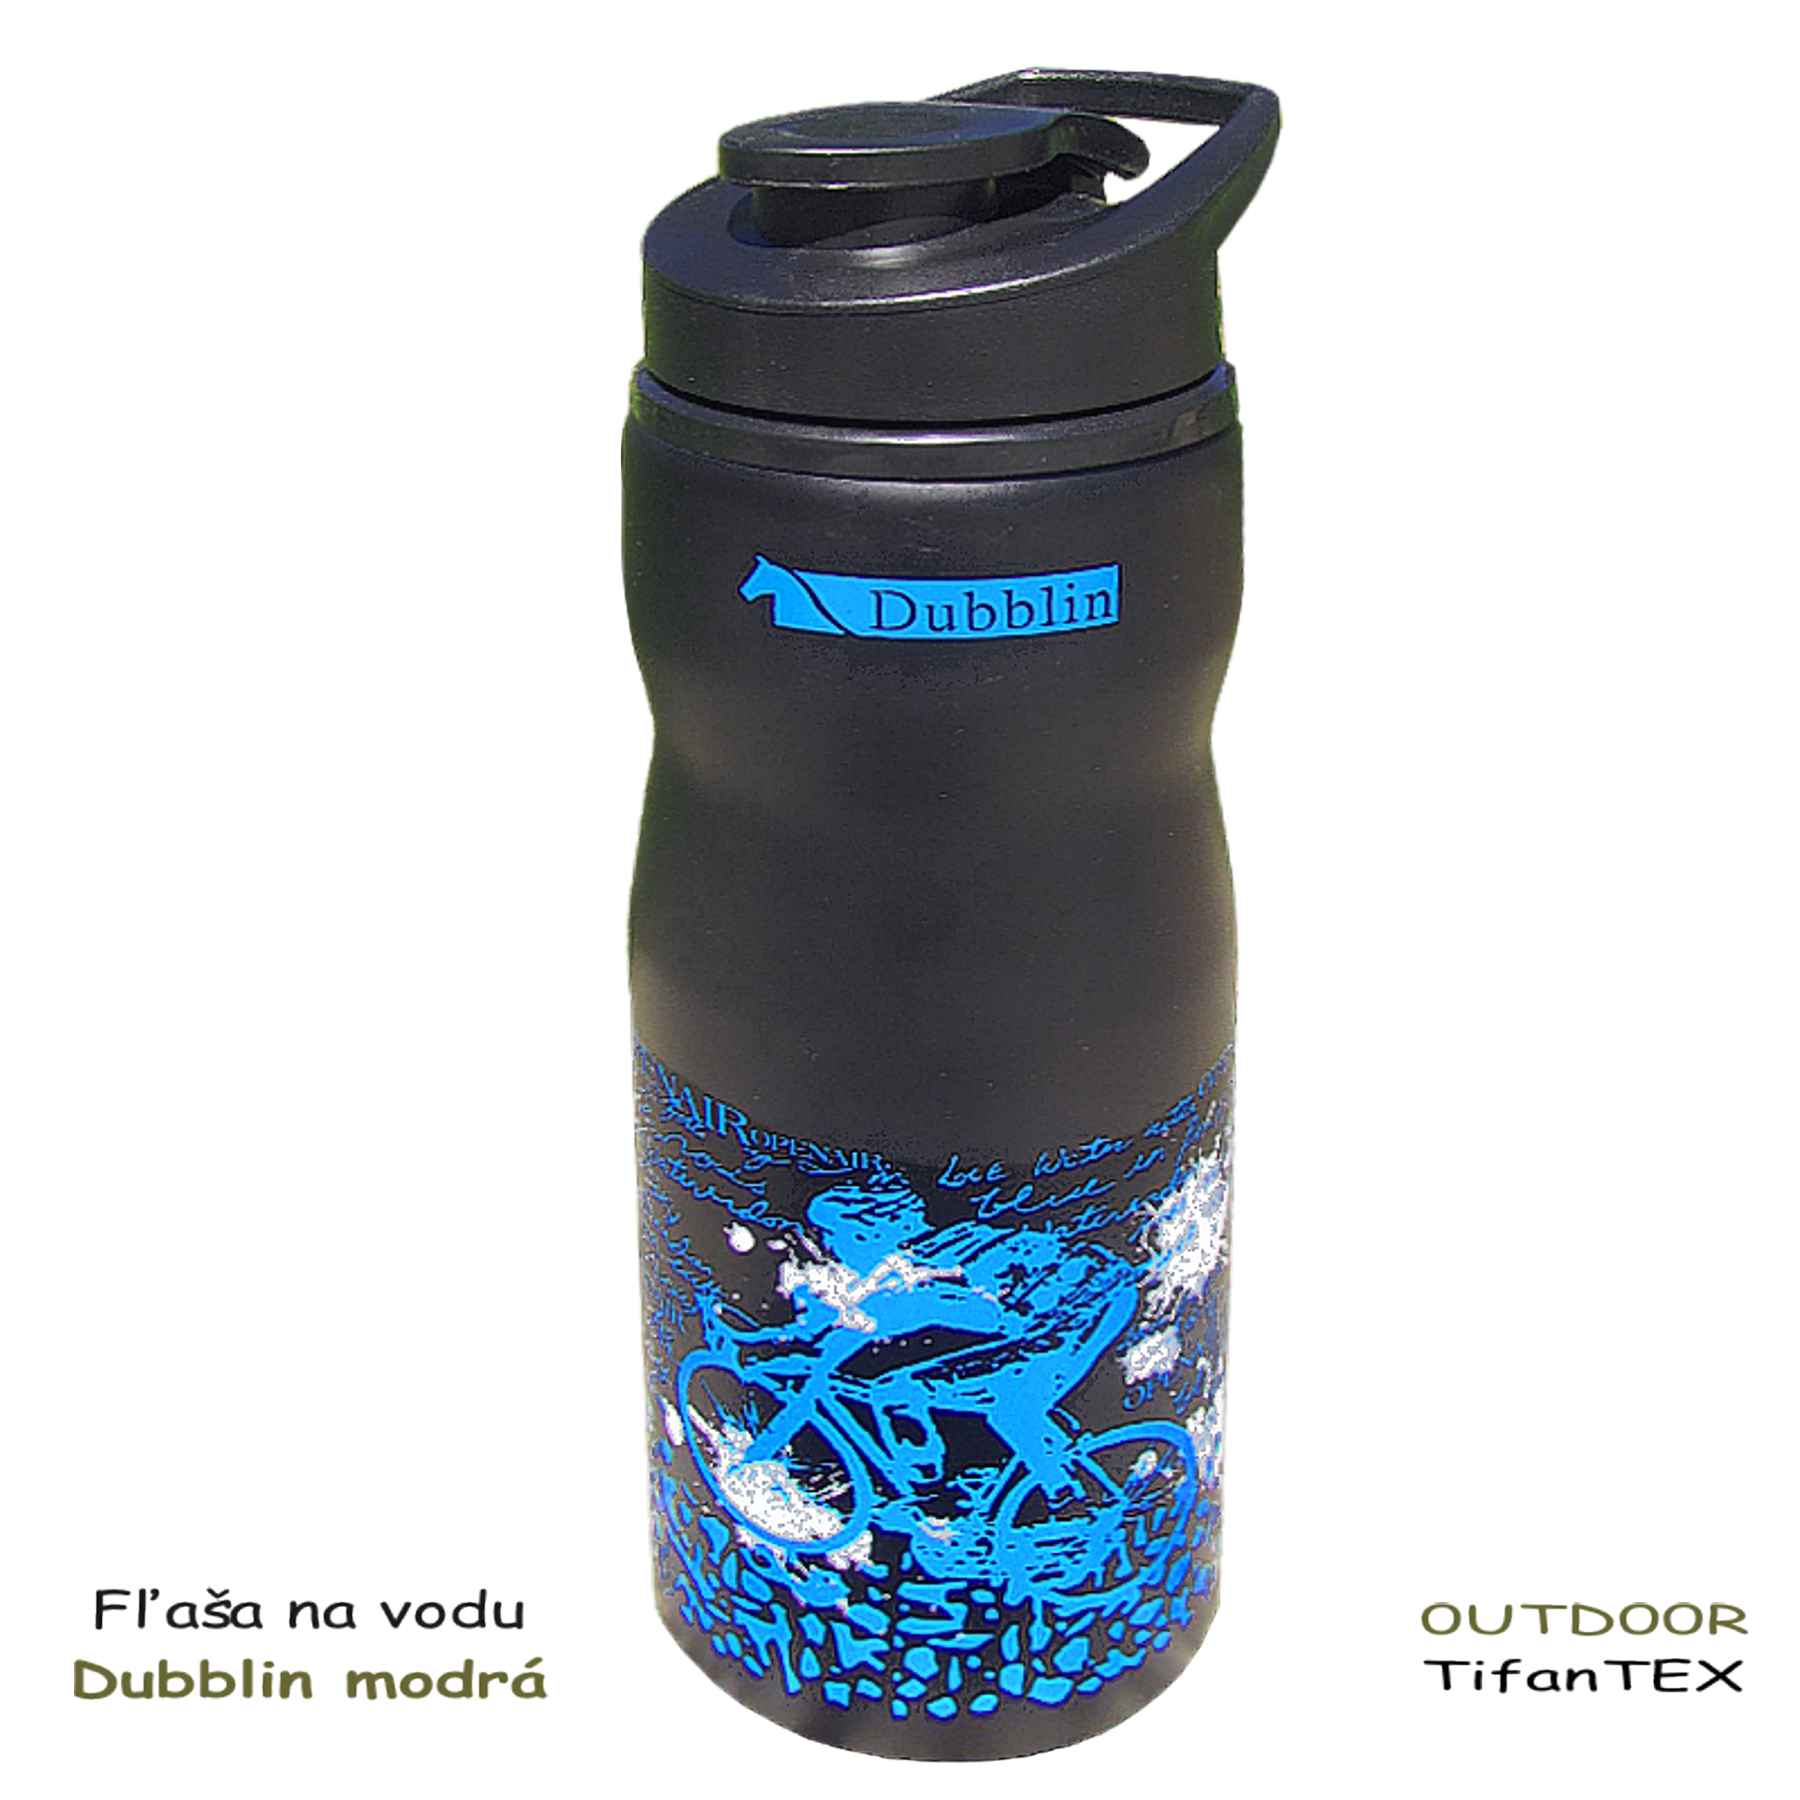 Športová fľaša na vodu Dubblin modrá, Tifantex oudoor veľkoobchod